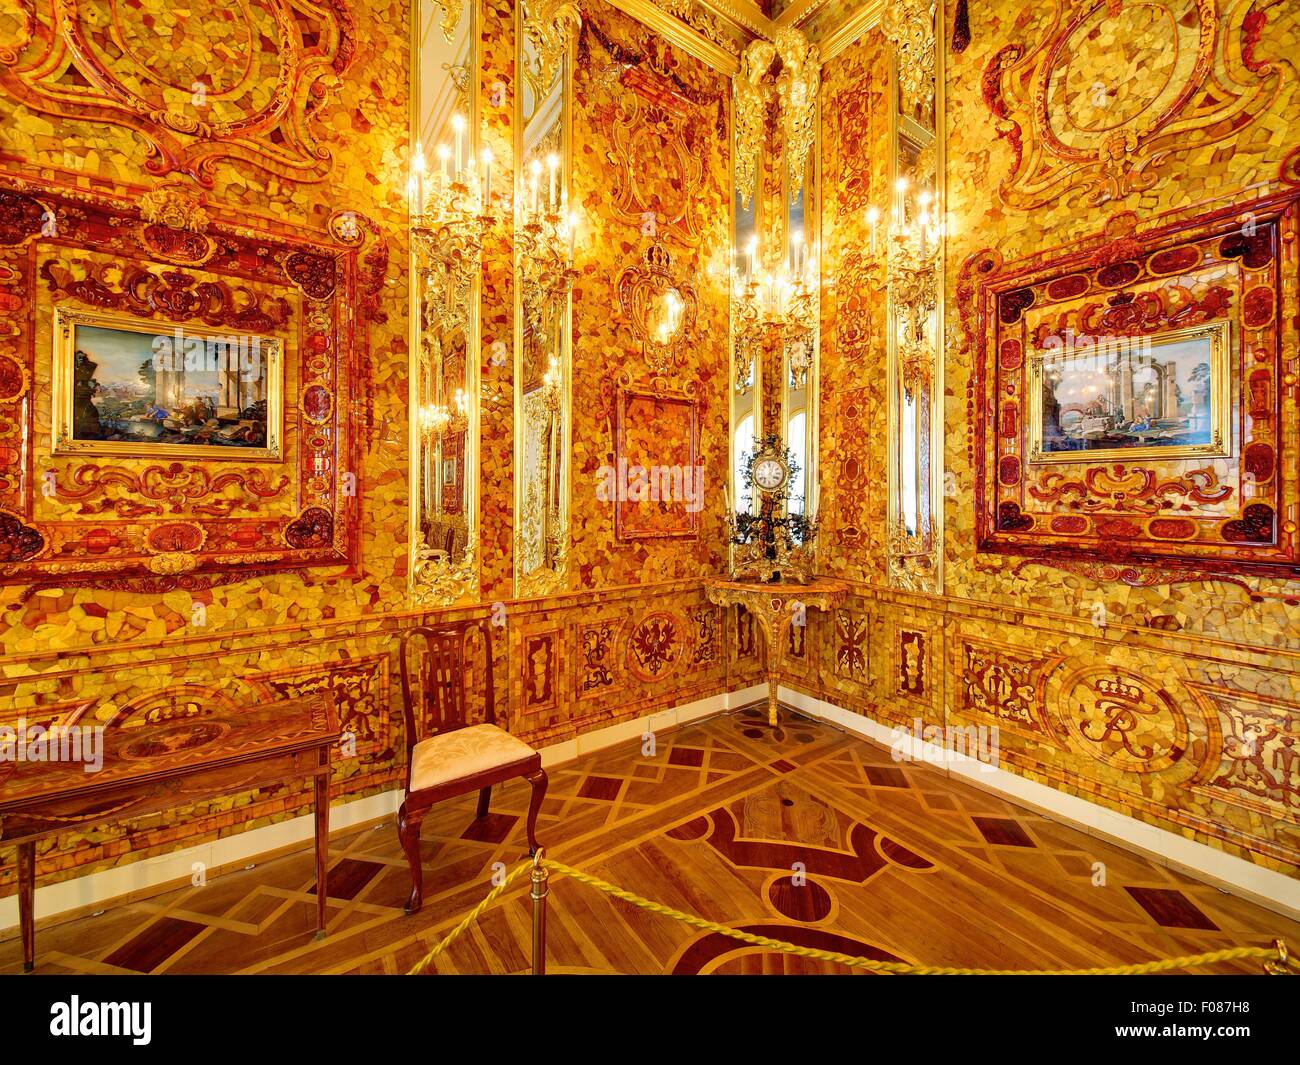 Paintings in illuminated Amber Room at Tsarskoye Selo, St. Petersburg, Russia Stock Photo